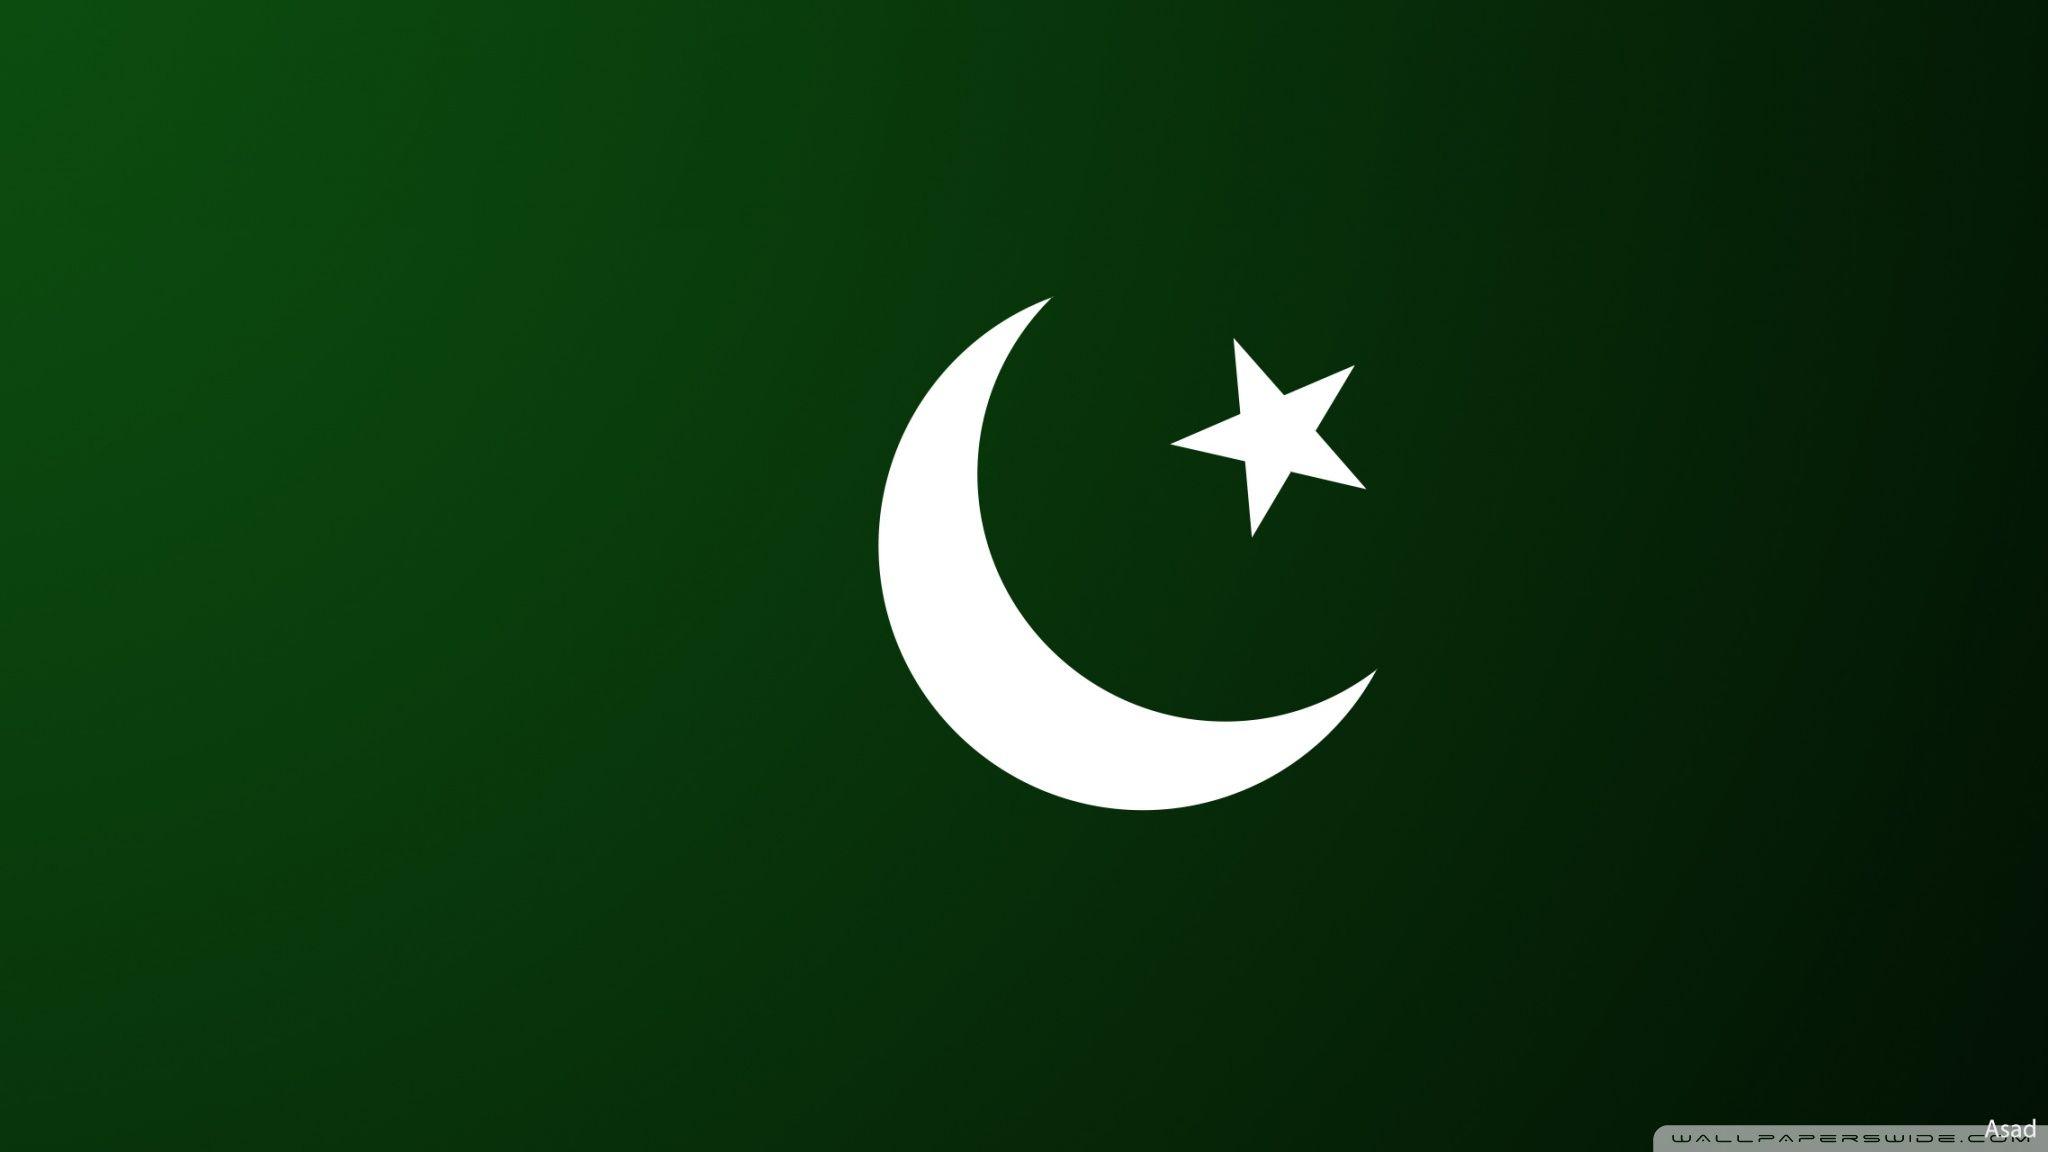 Pakistan Flag Wallpapers - Top Free Pakistan Flag ...